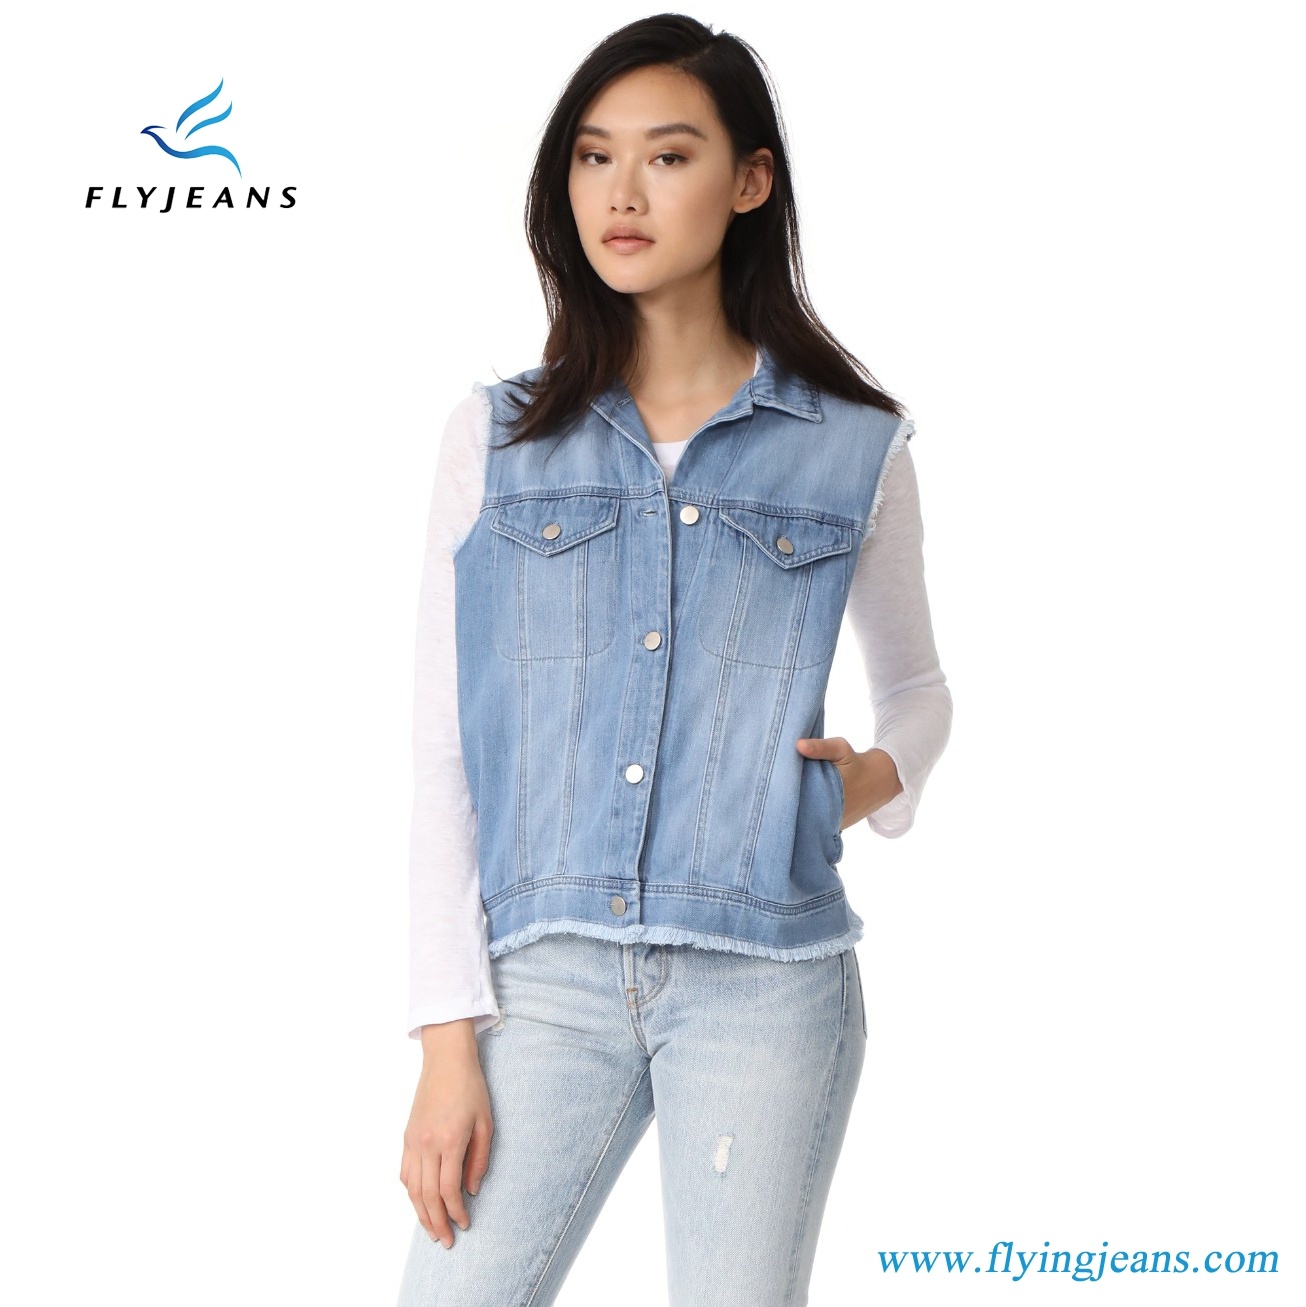 New Design Women Jeans Sleeveless Jackets Ladies Denim Vest with 56% Lyocell /44% Cotton